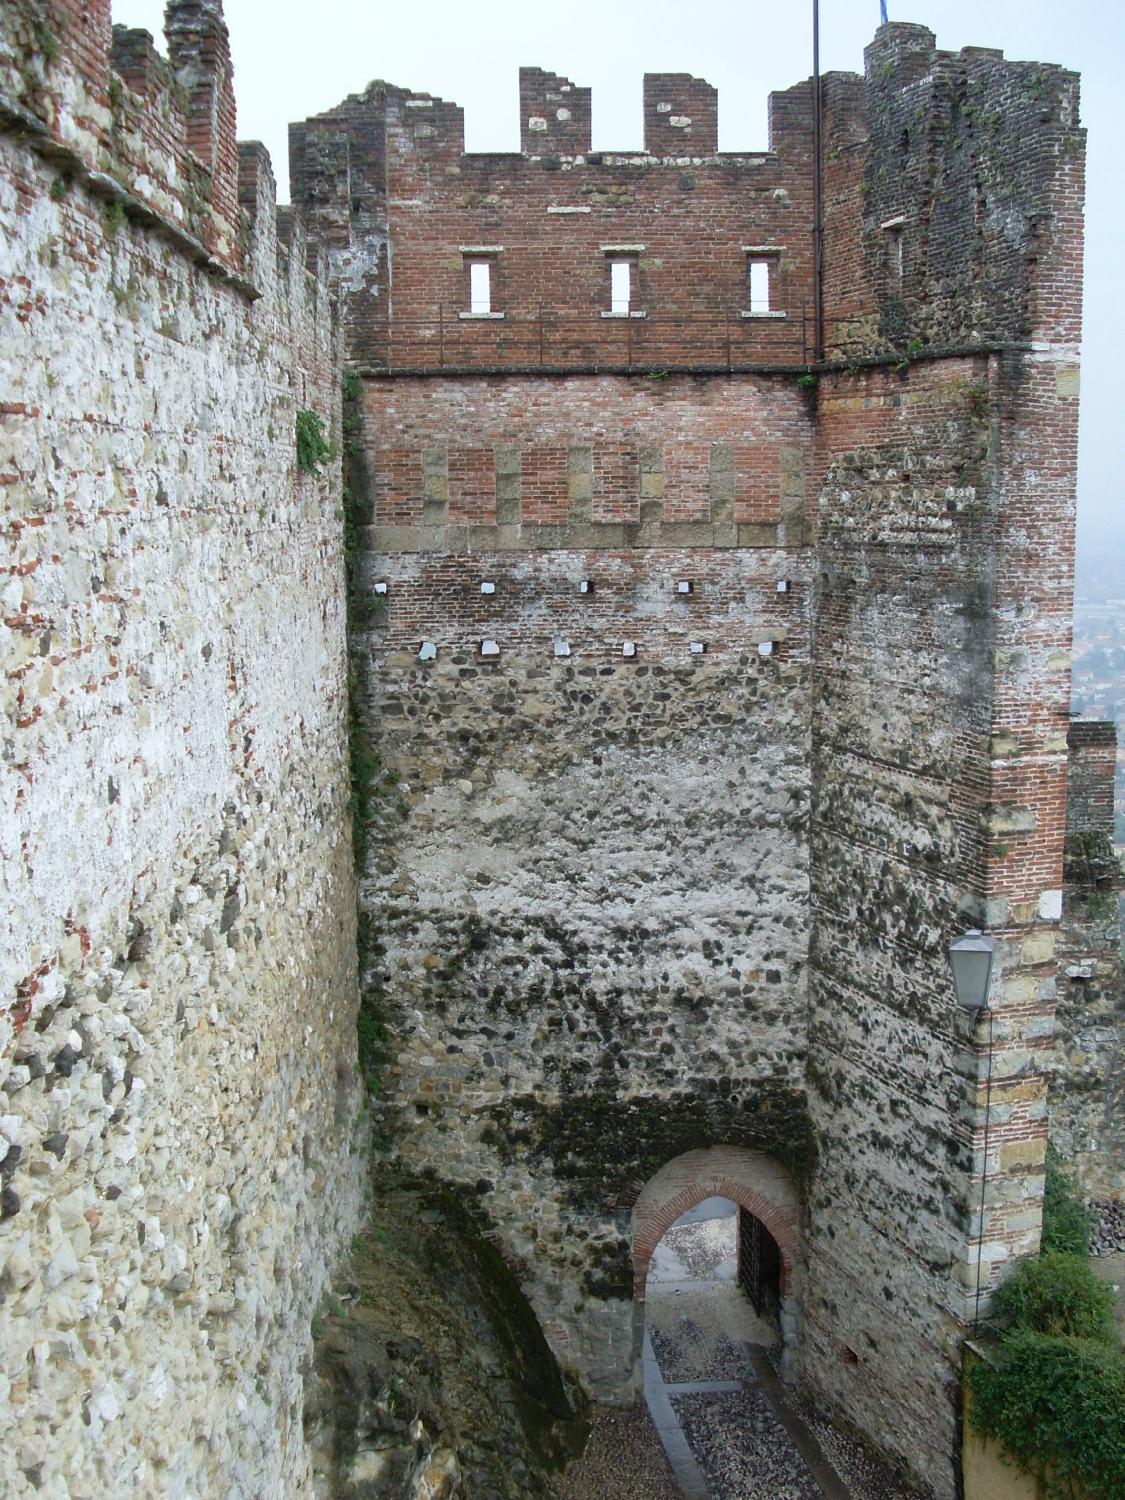 Castello Superiore